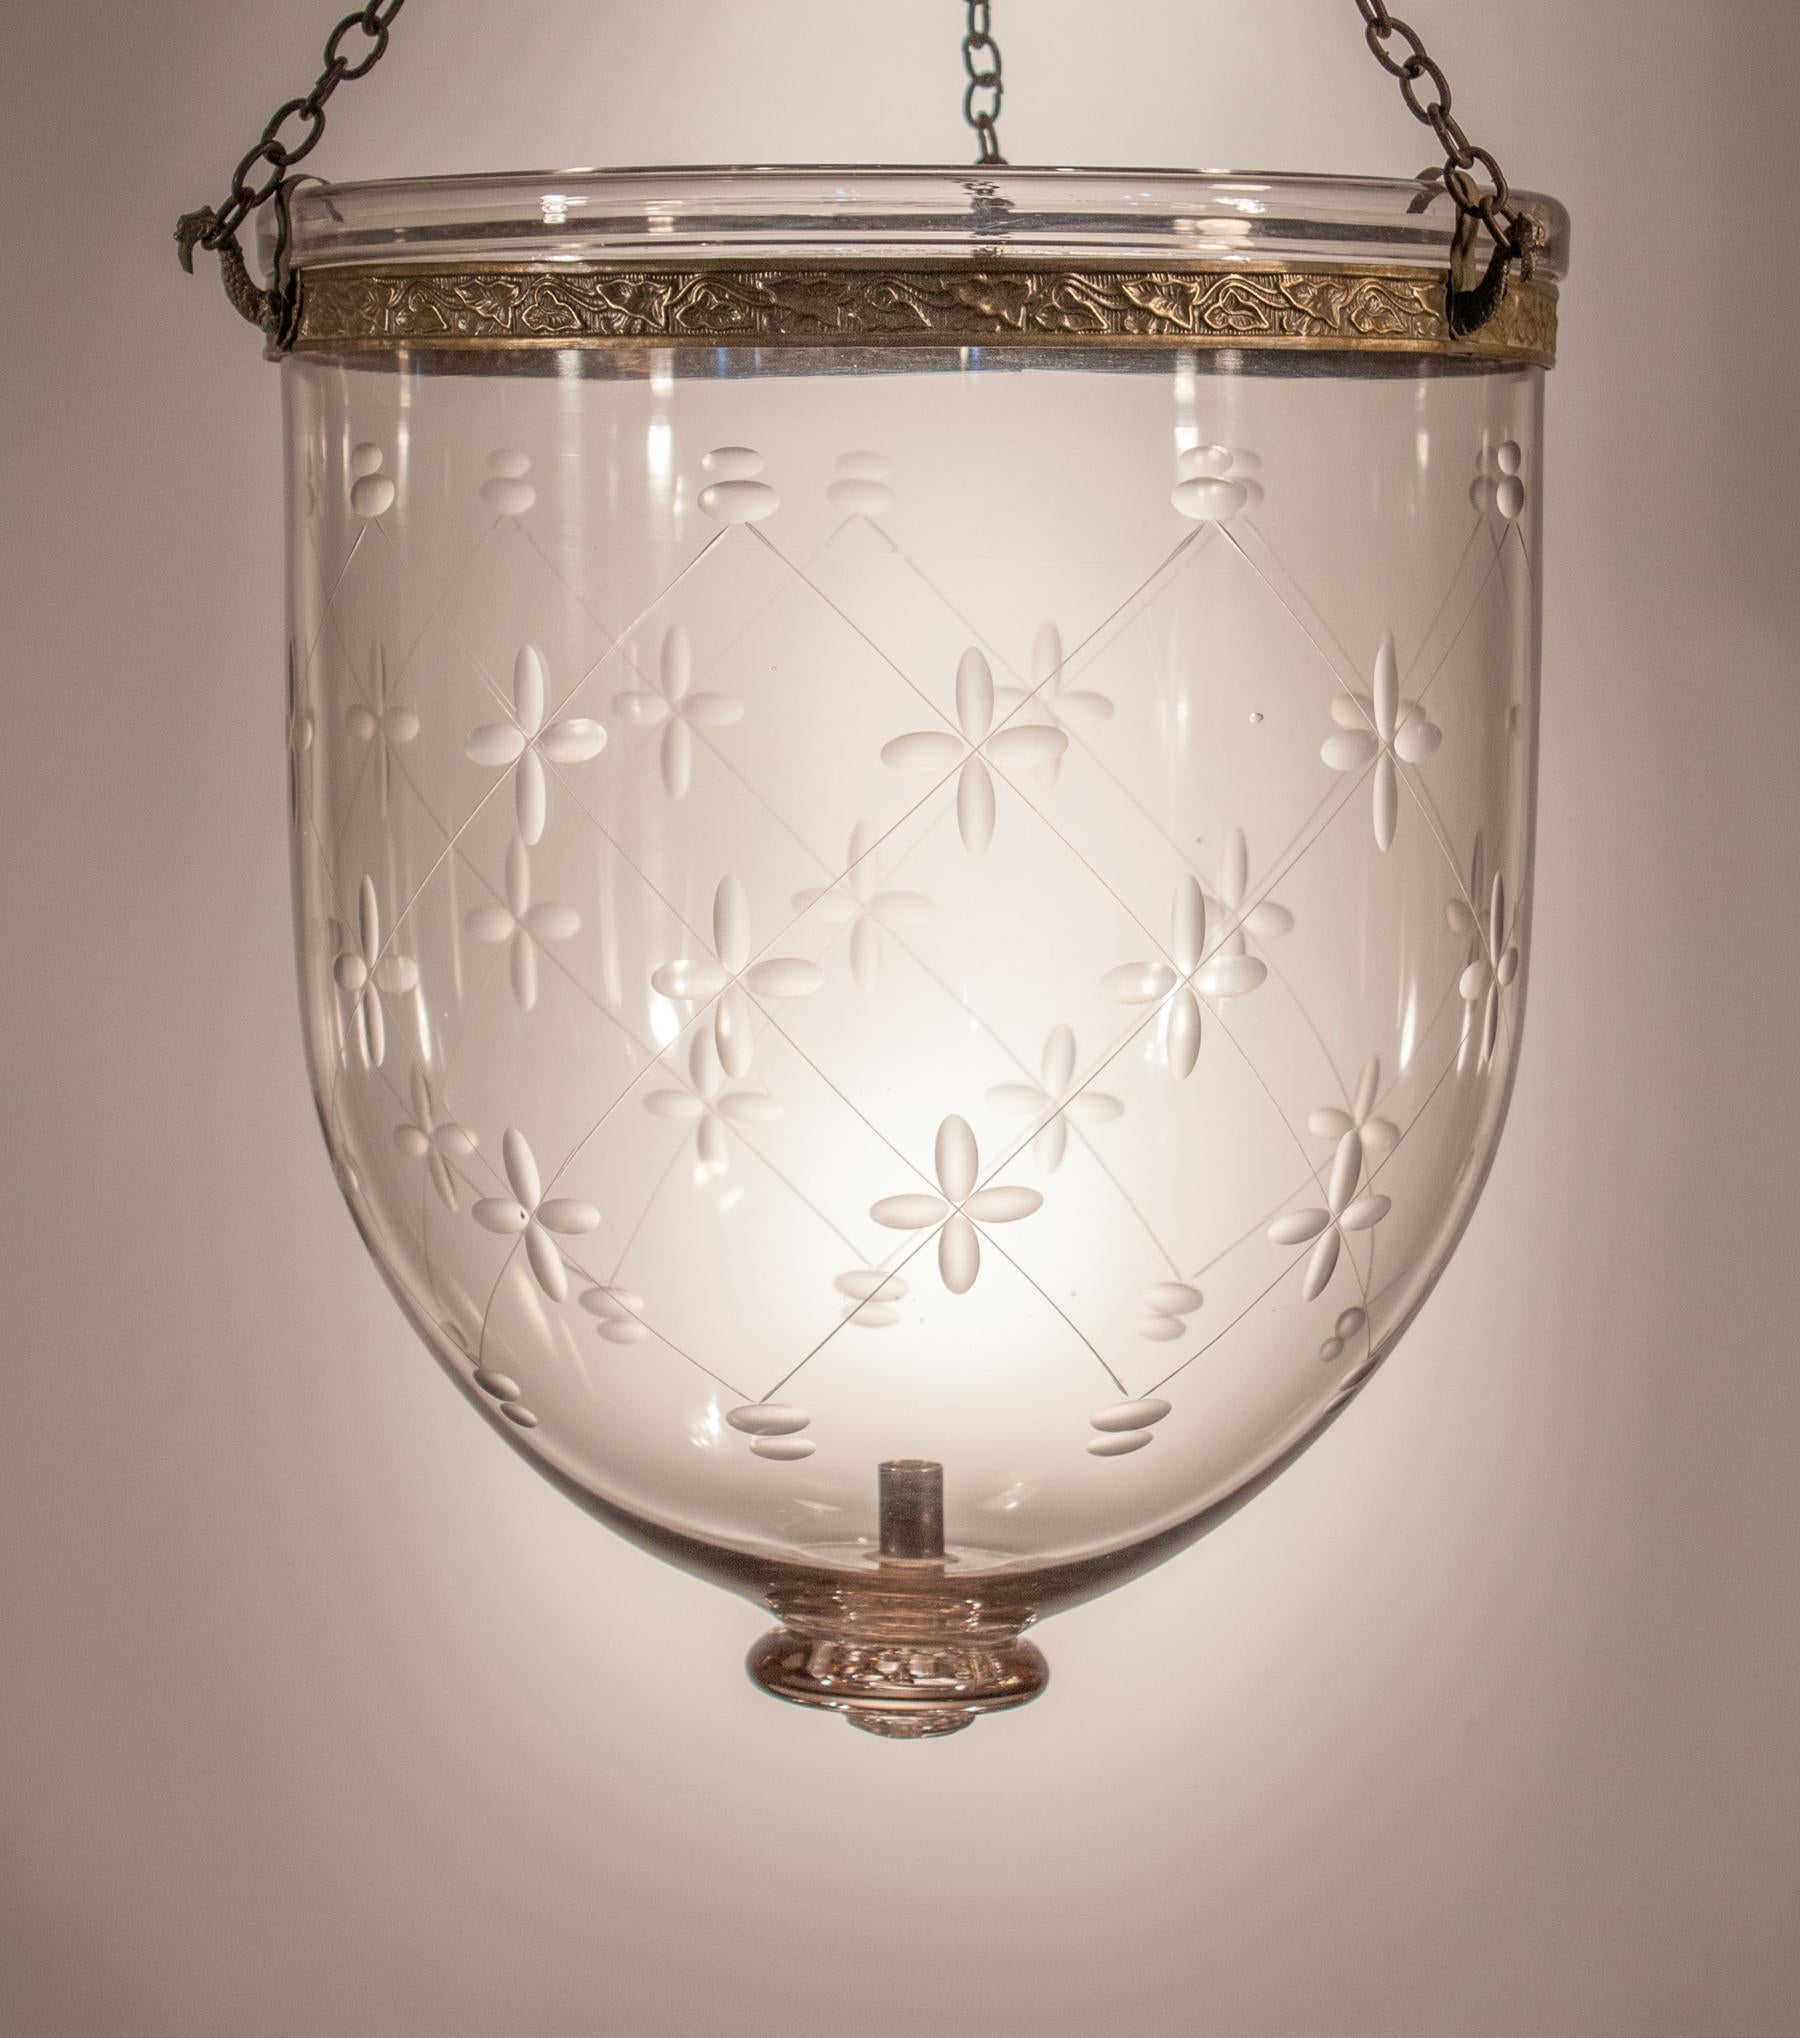 19th Century Antique Bell Jar Lantern with Trellis Etching